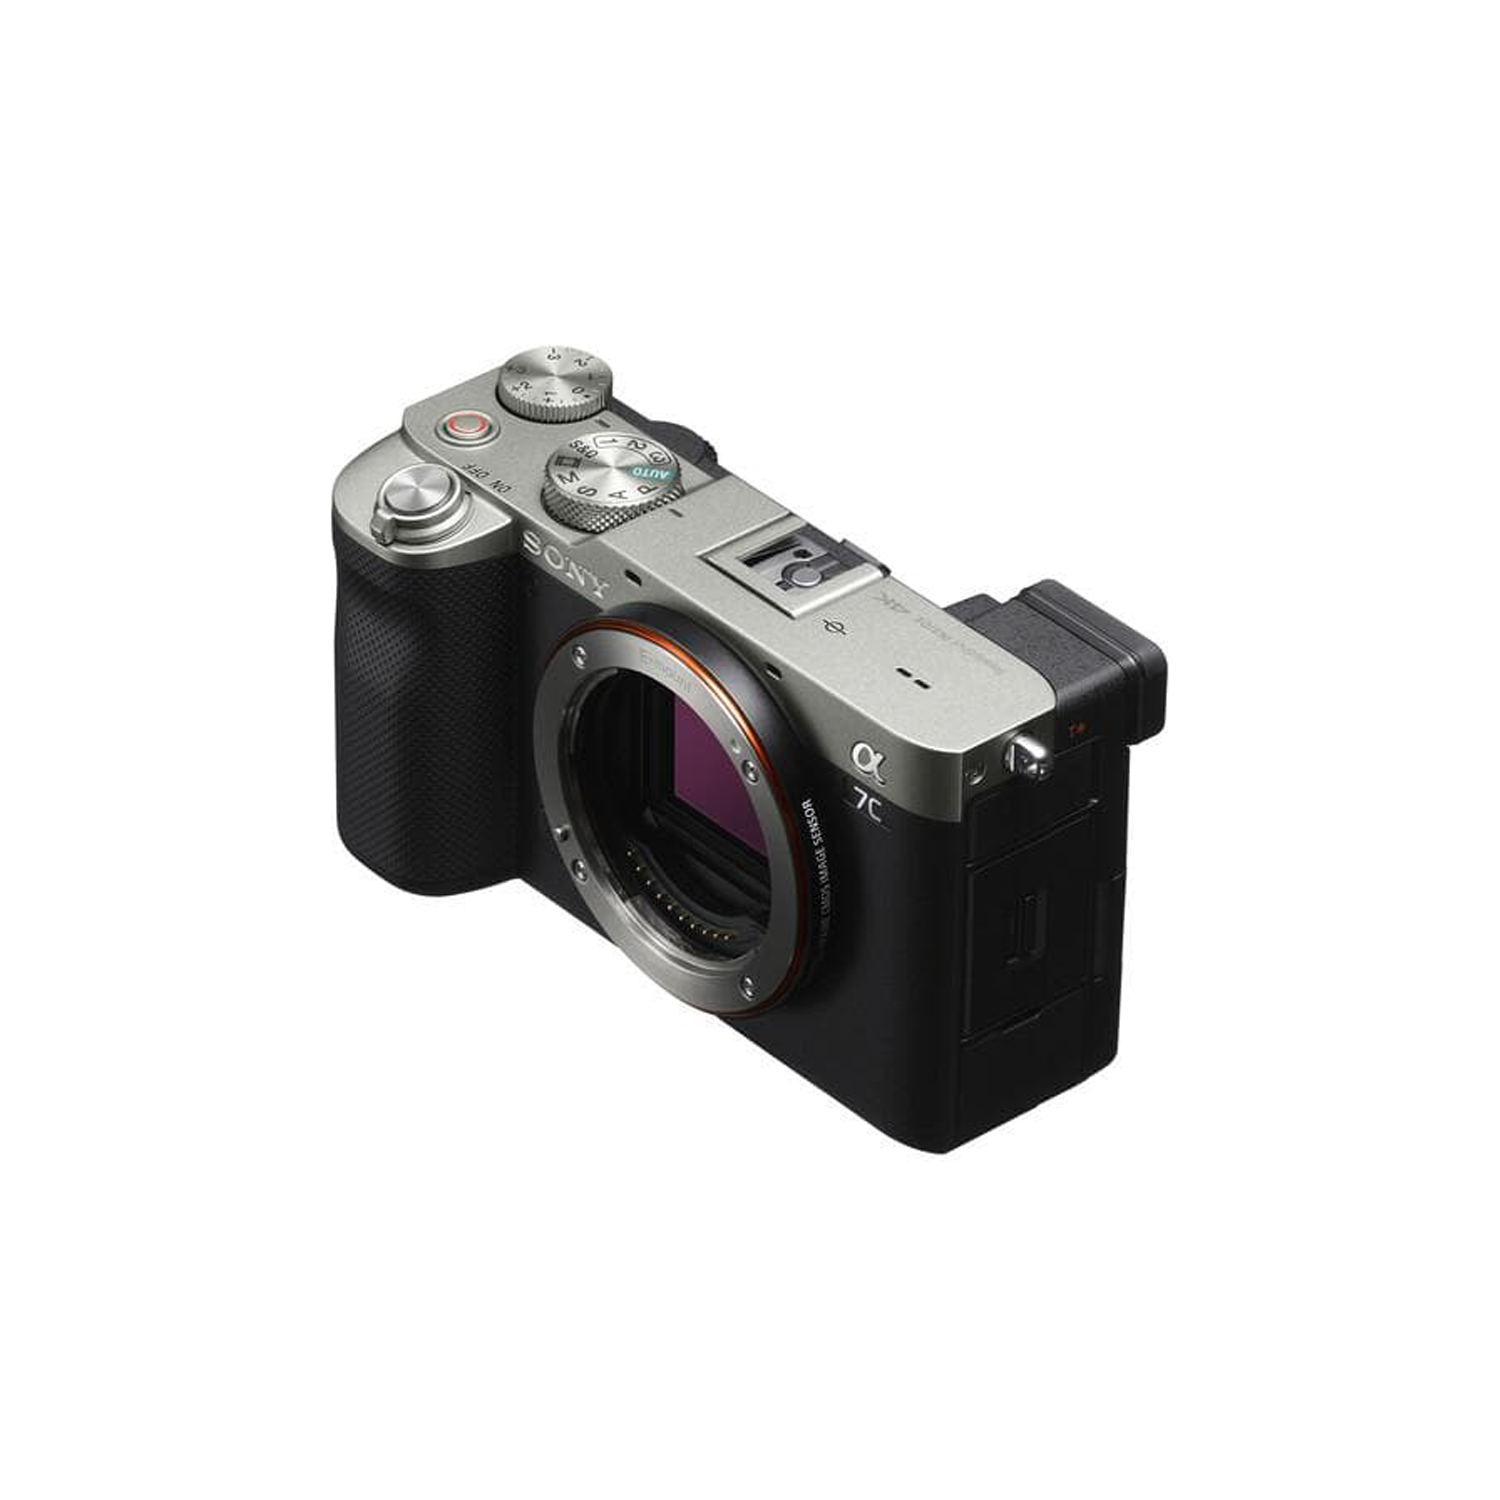 Sony Alpha 7C Mirrorless Nigital Camera Silver Boîtier Seulement - Boîte ouverte